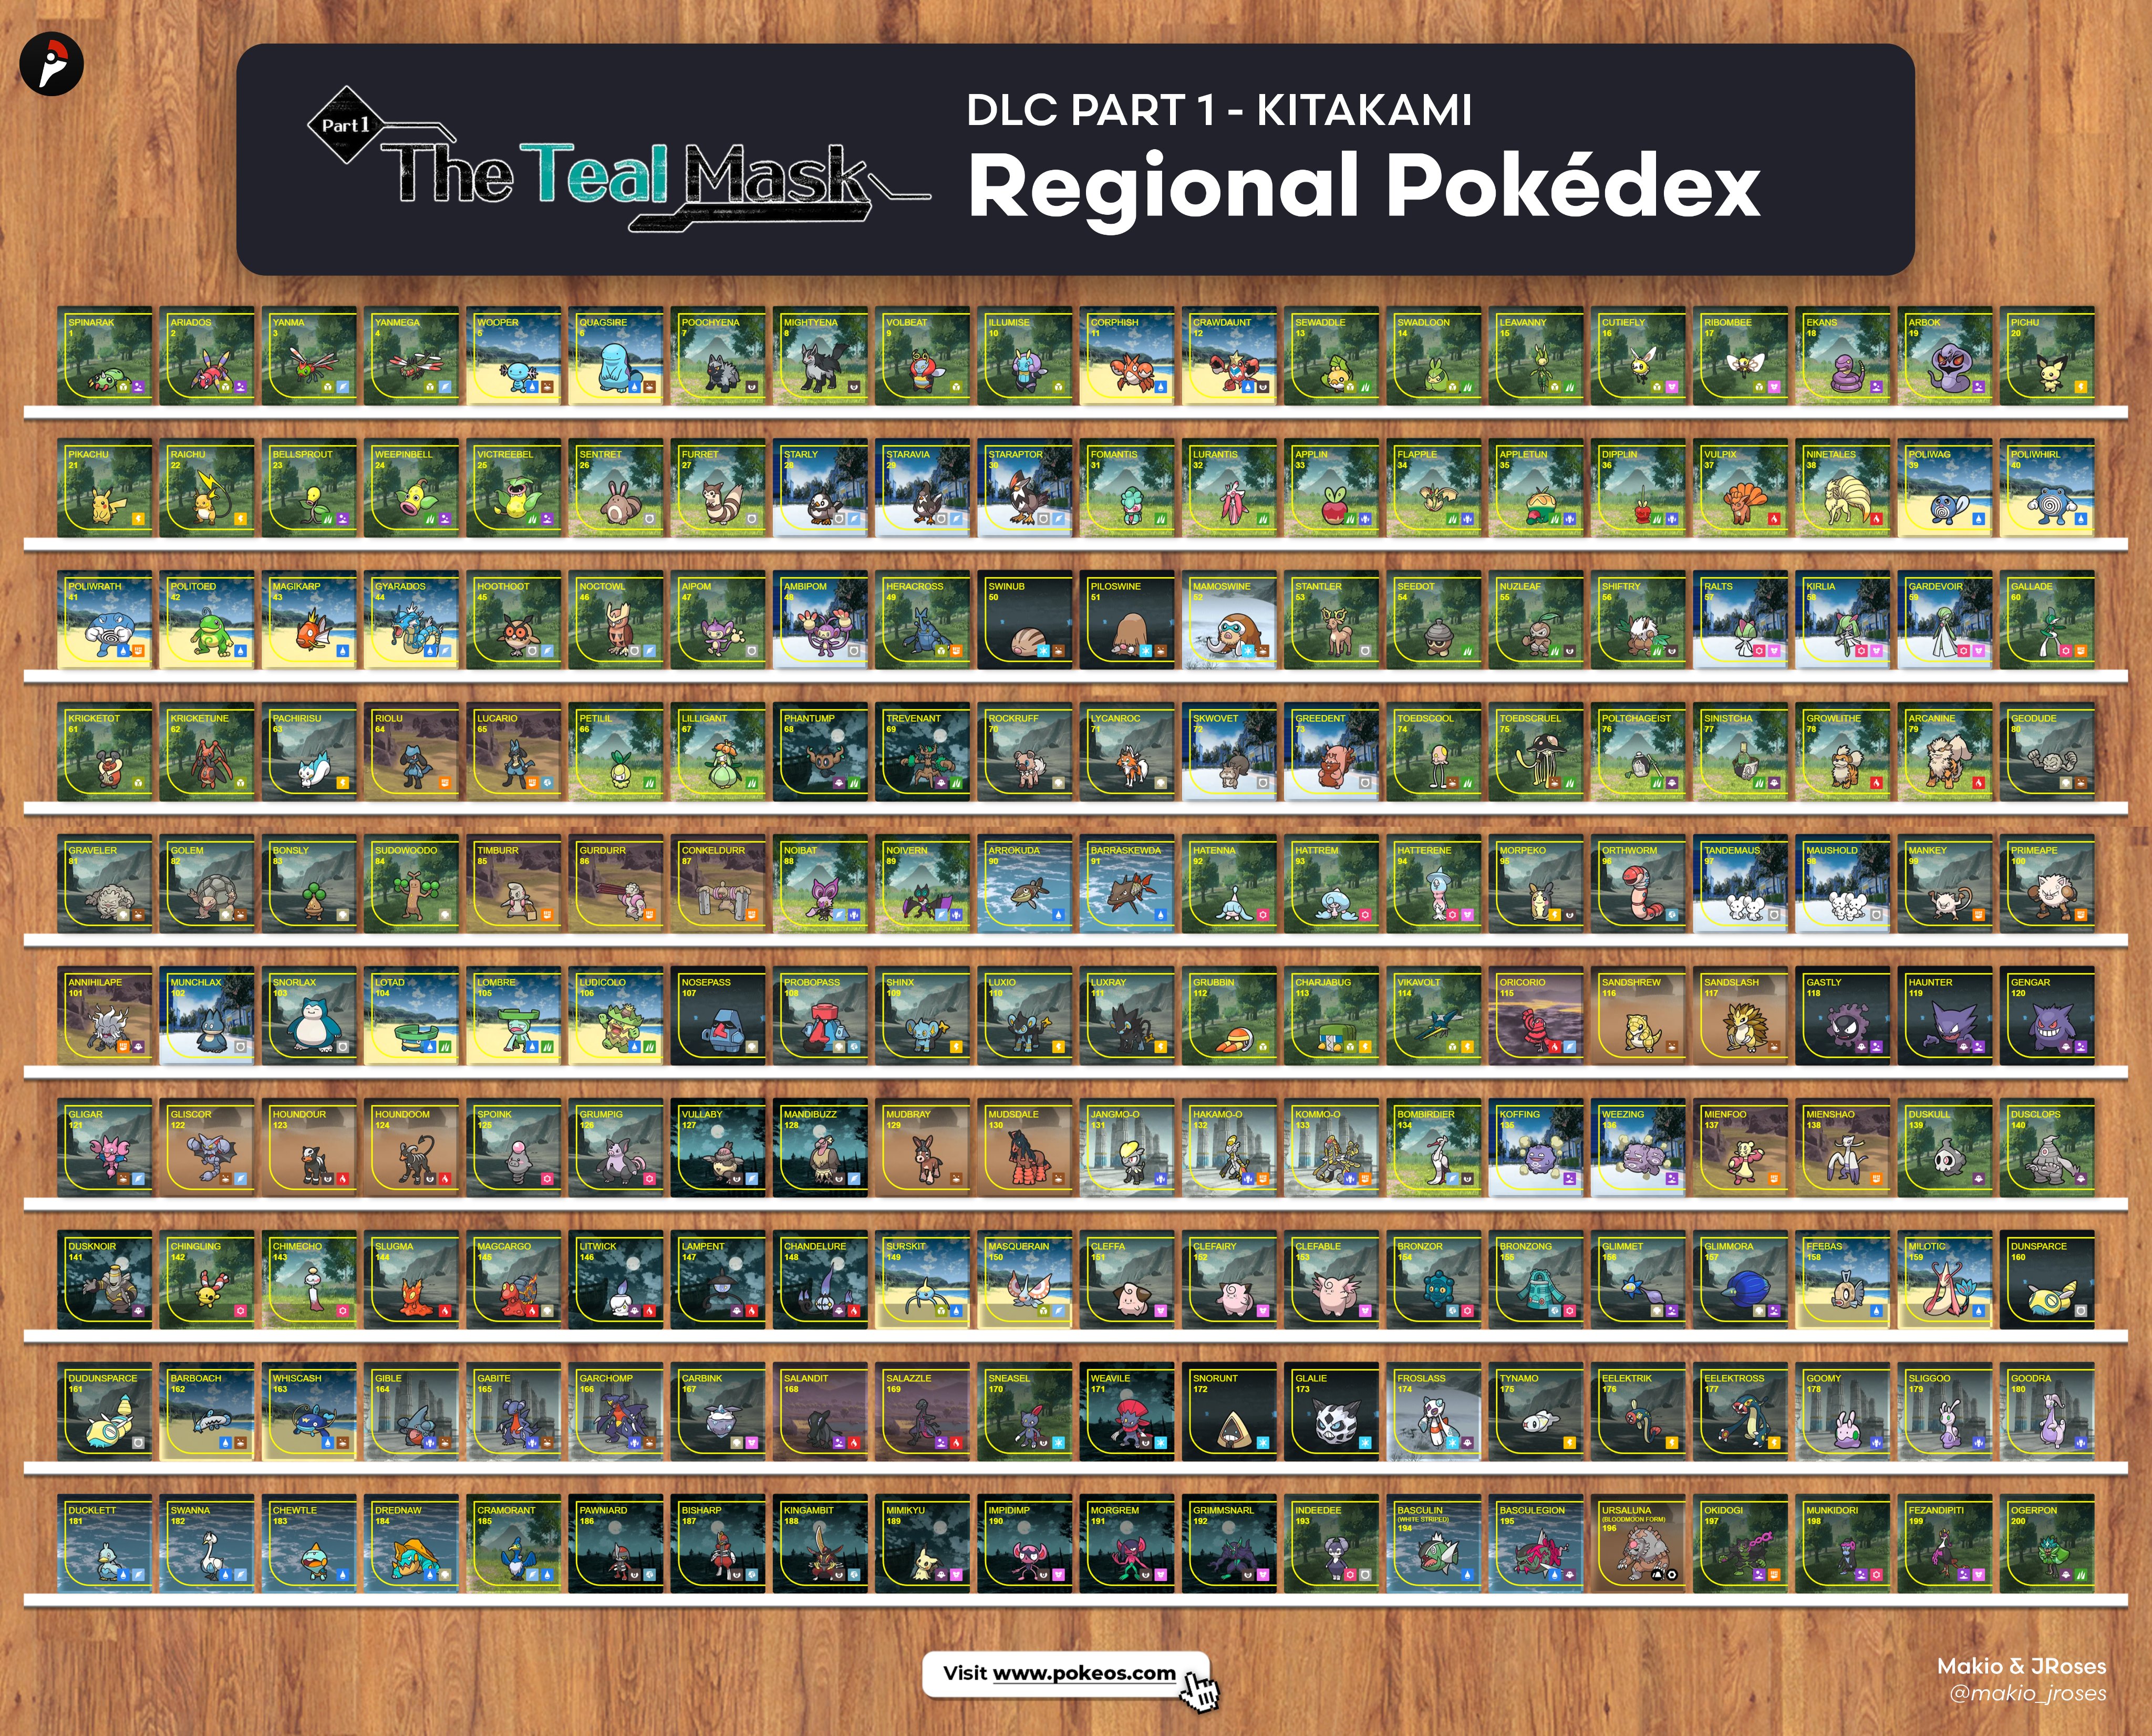 All Teal Mask DLC Pokédex images : r/PokeLeaks